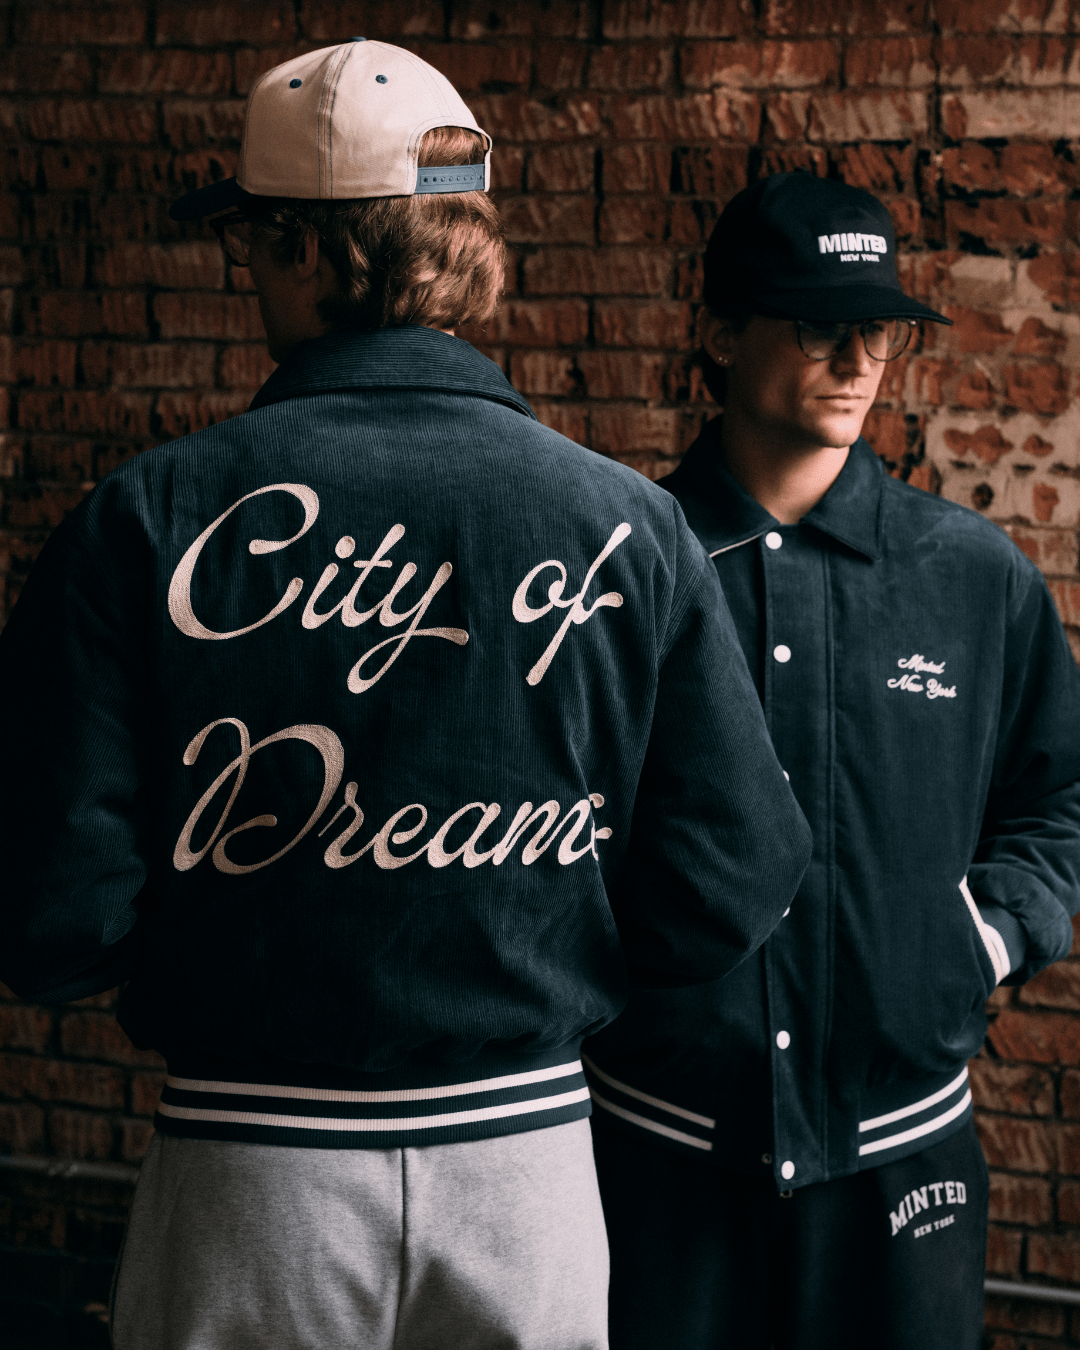 Maroon "City of Dreams" Corduroy Jacket - Minted New York